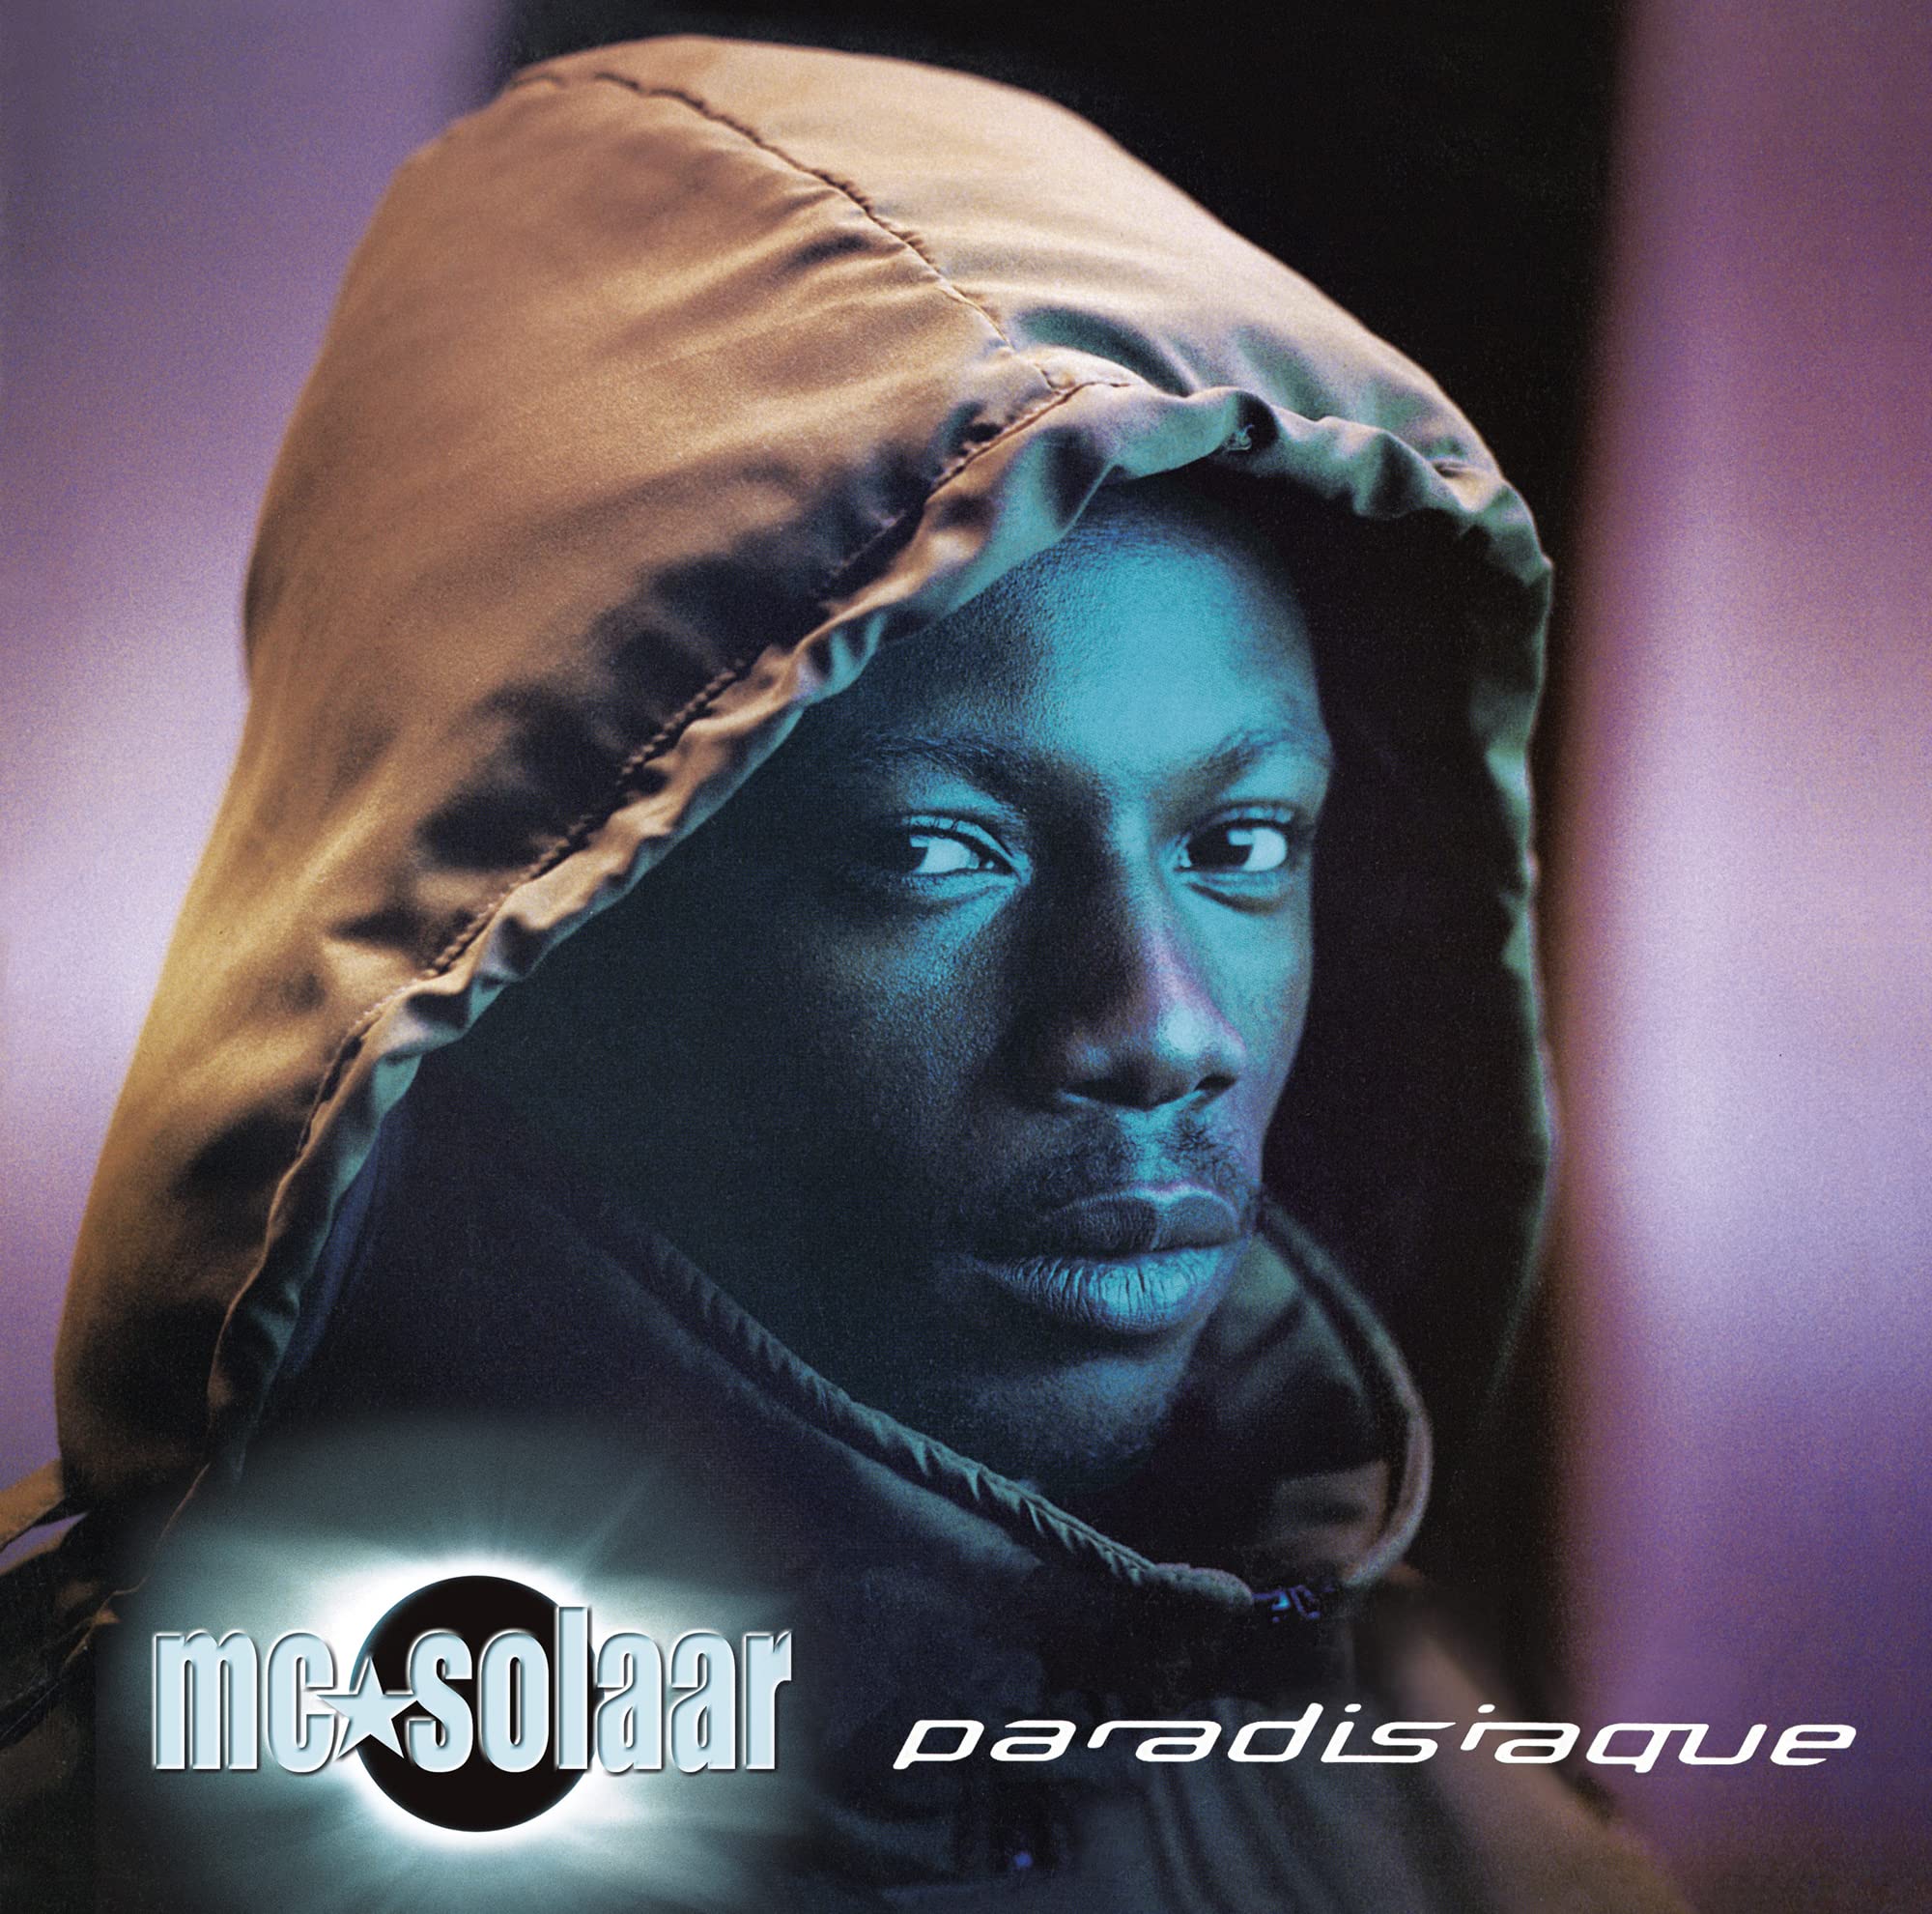 Paradisiaque (2CD) on MovieShack